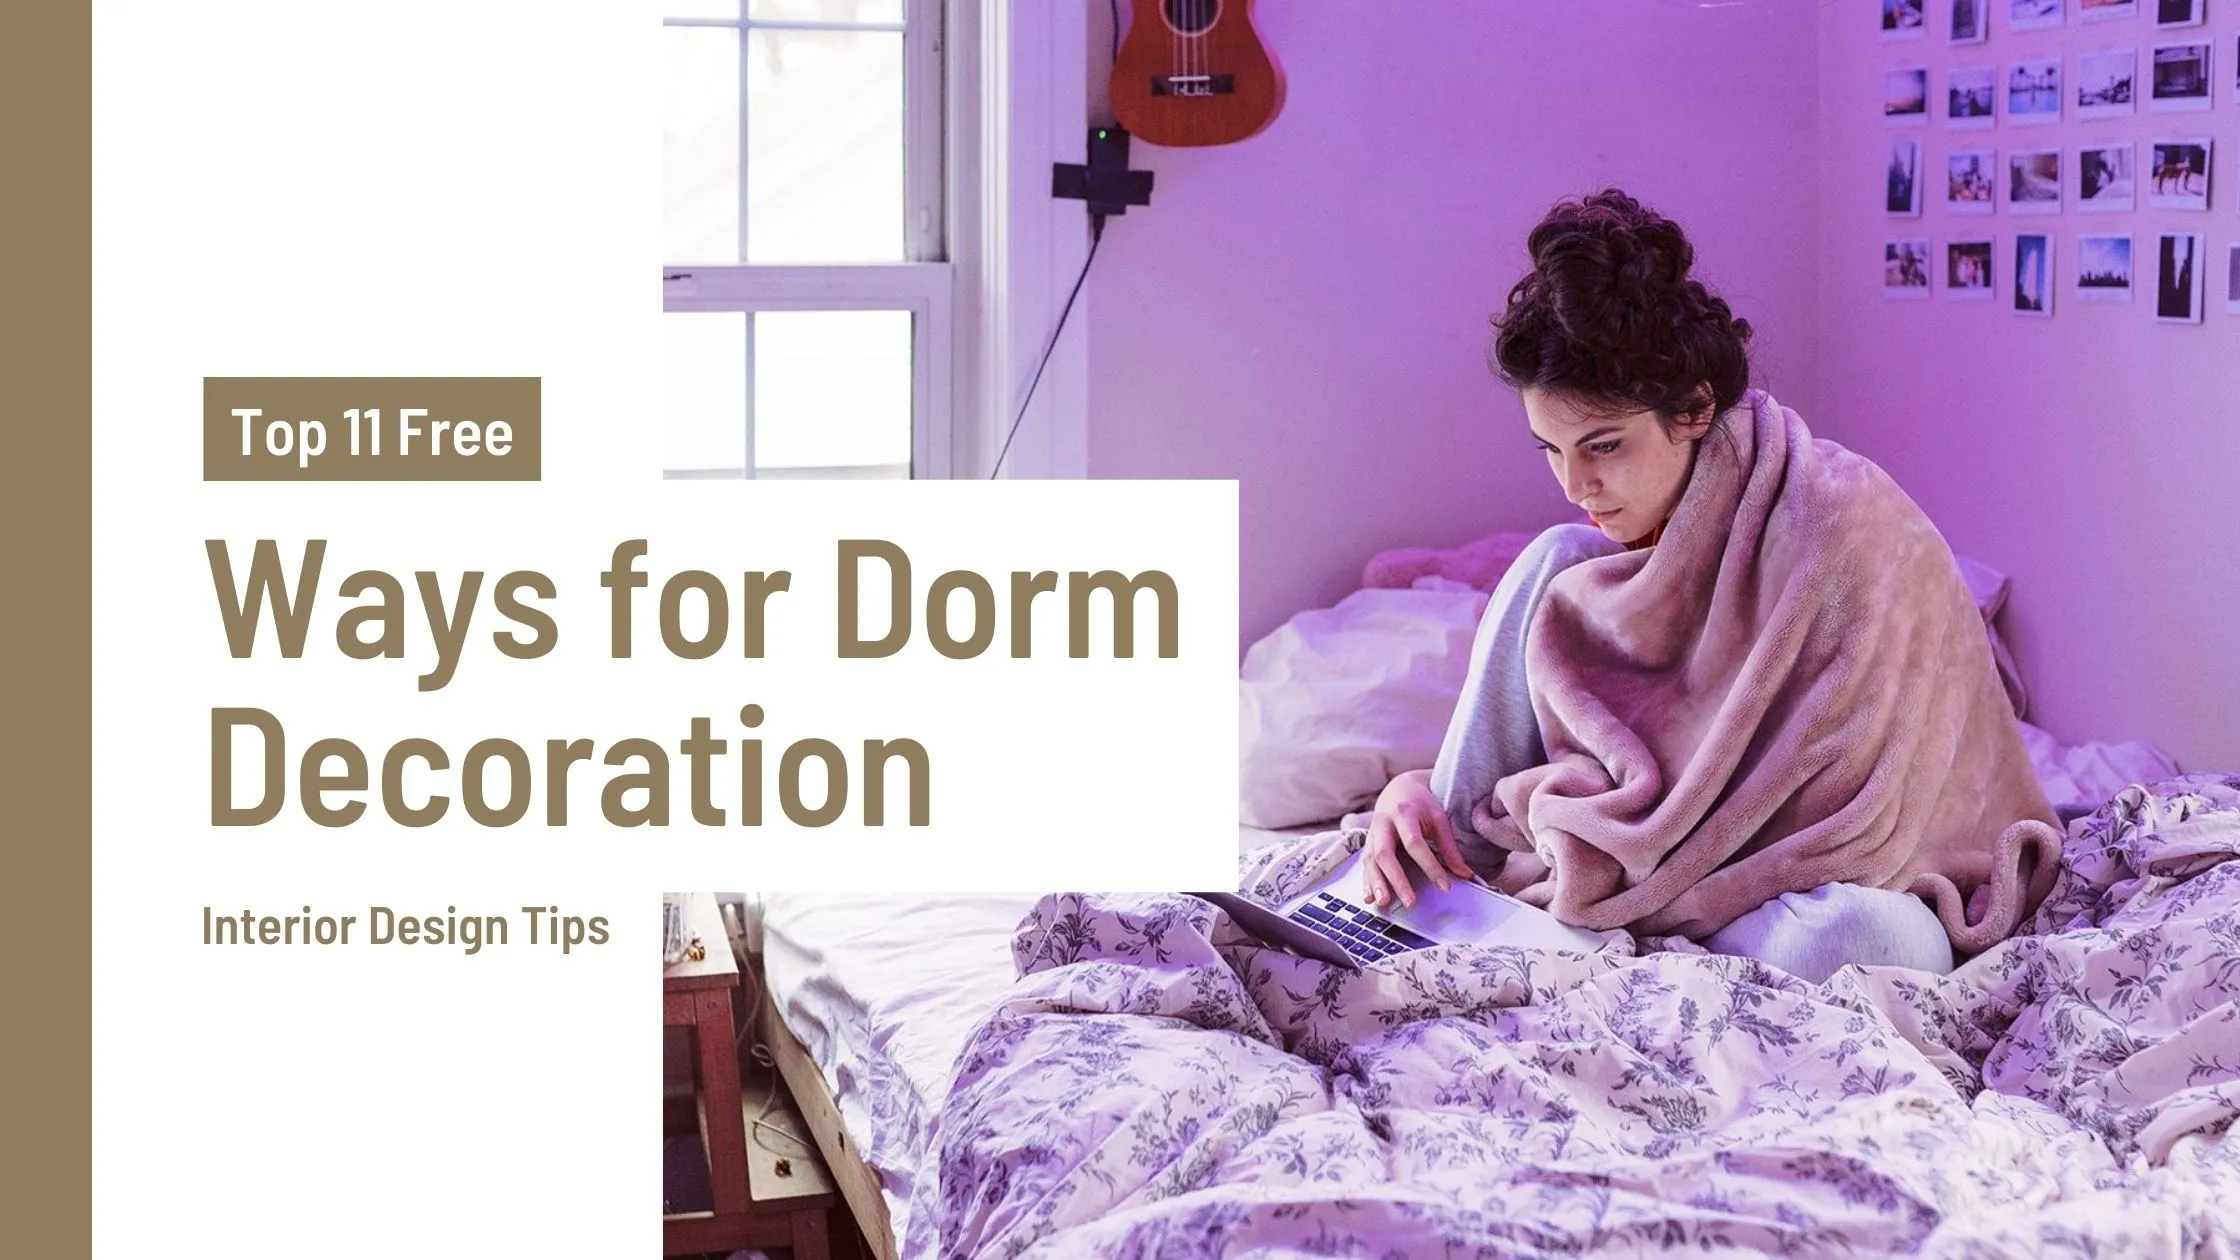 Top 11 Free Ways for Dorm Decoration